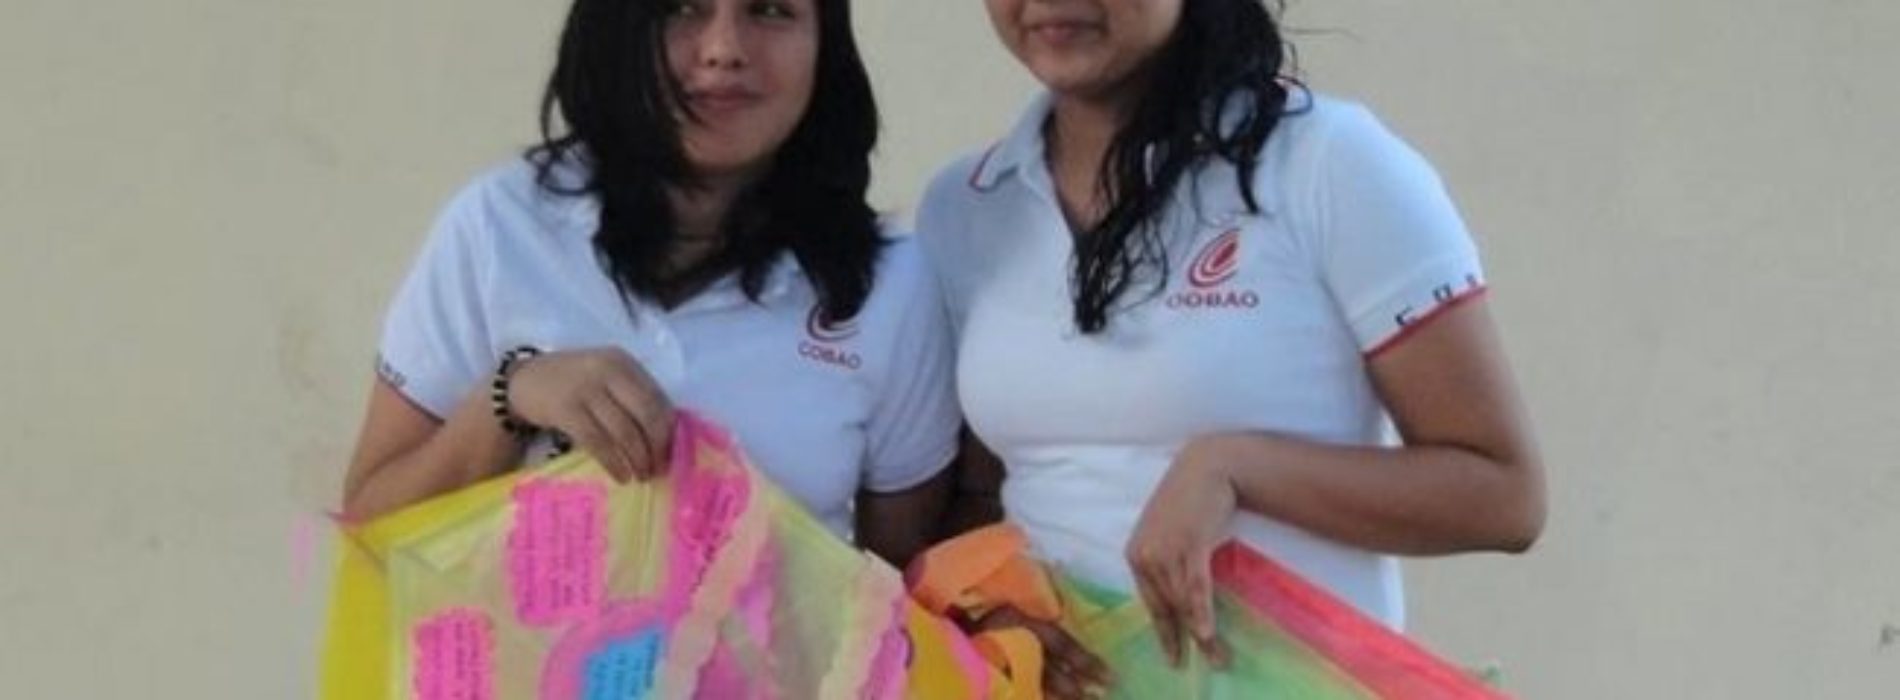 Orgullo Cobao: Ex alumna de excelencia, culmina estudios de
Medicina en UAO